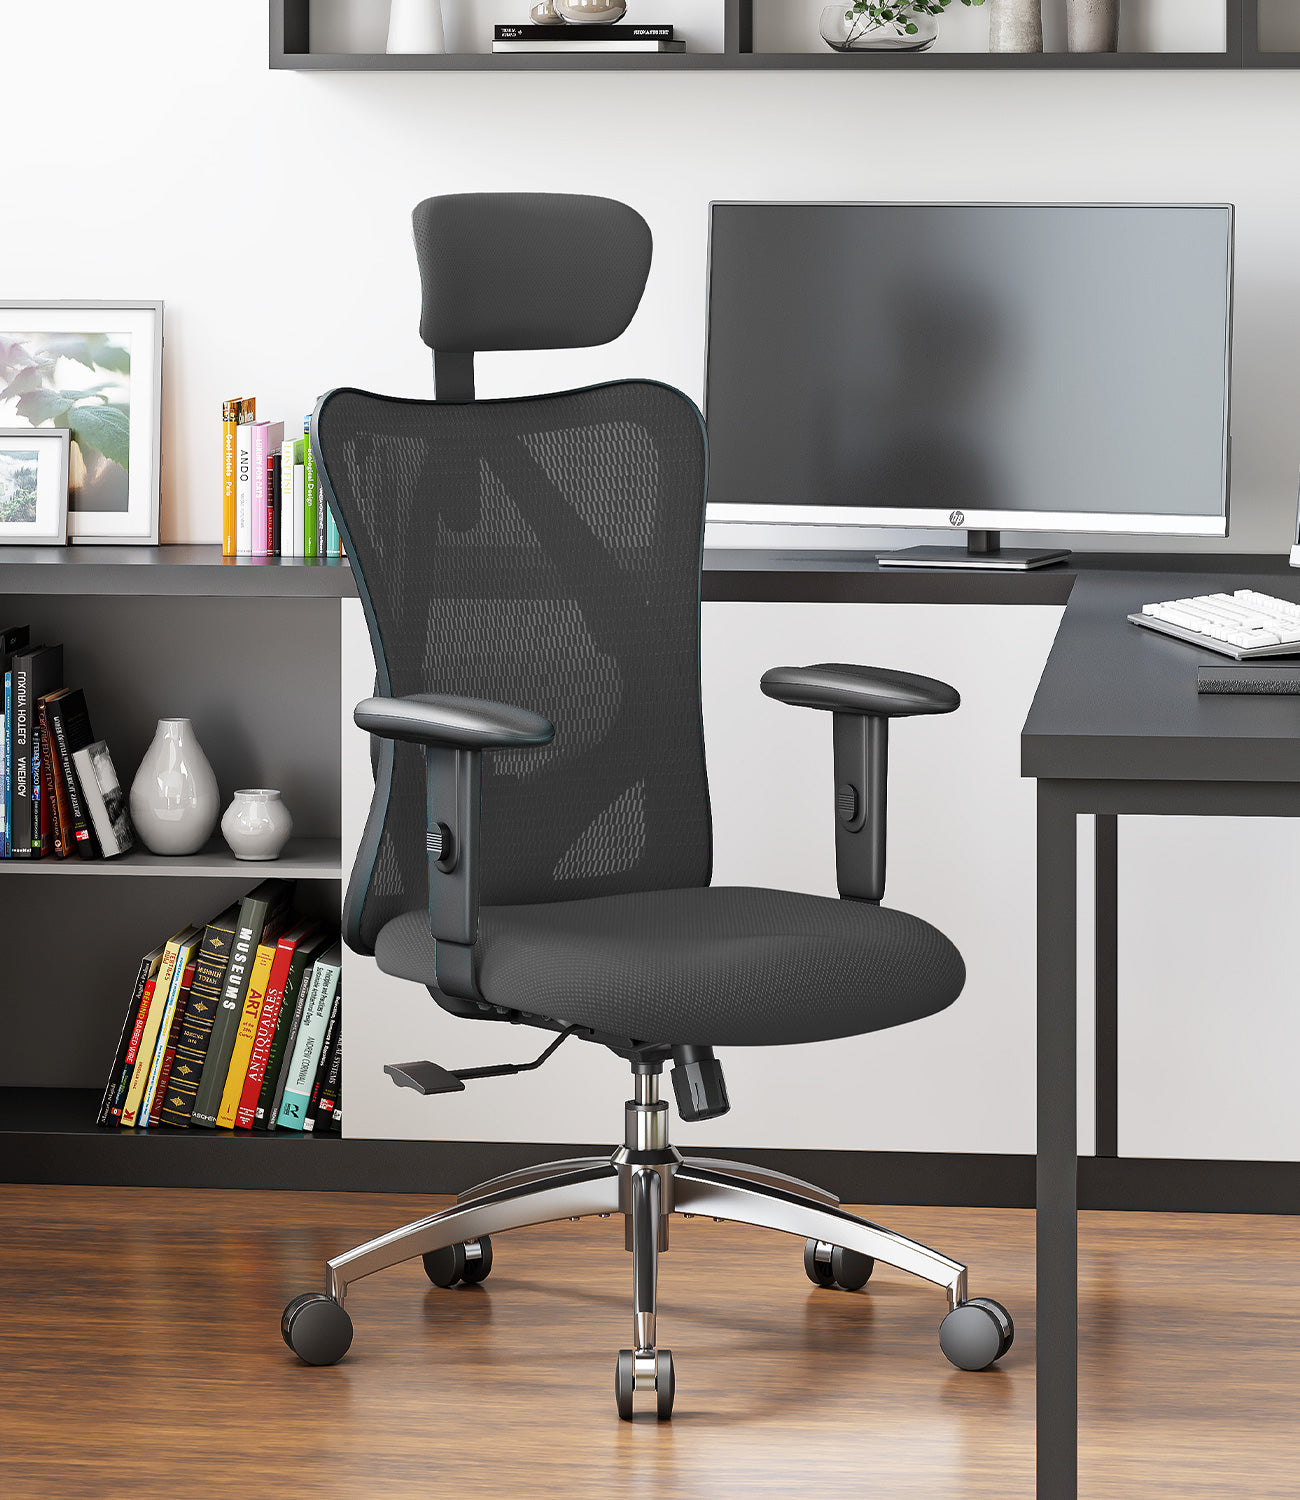 SIHOO M18 Ergonomic Office Chair, M18 Gaming Chair – iFirst